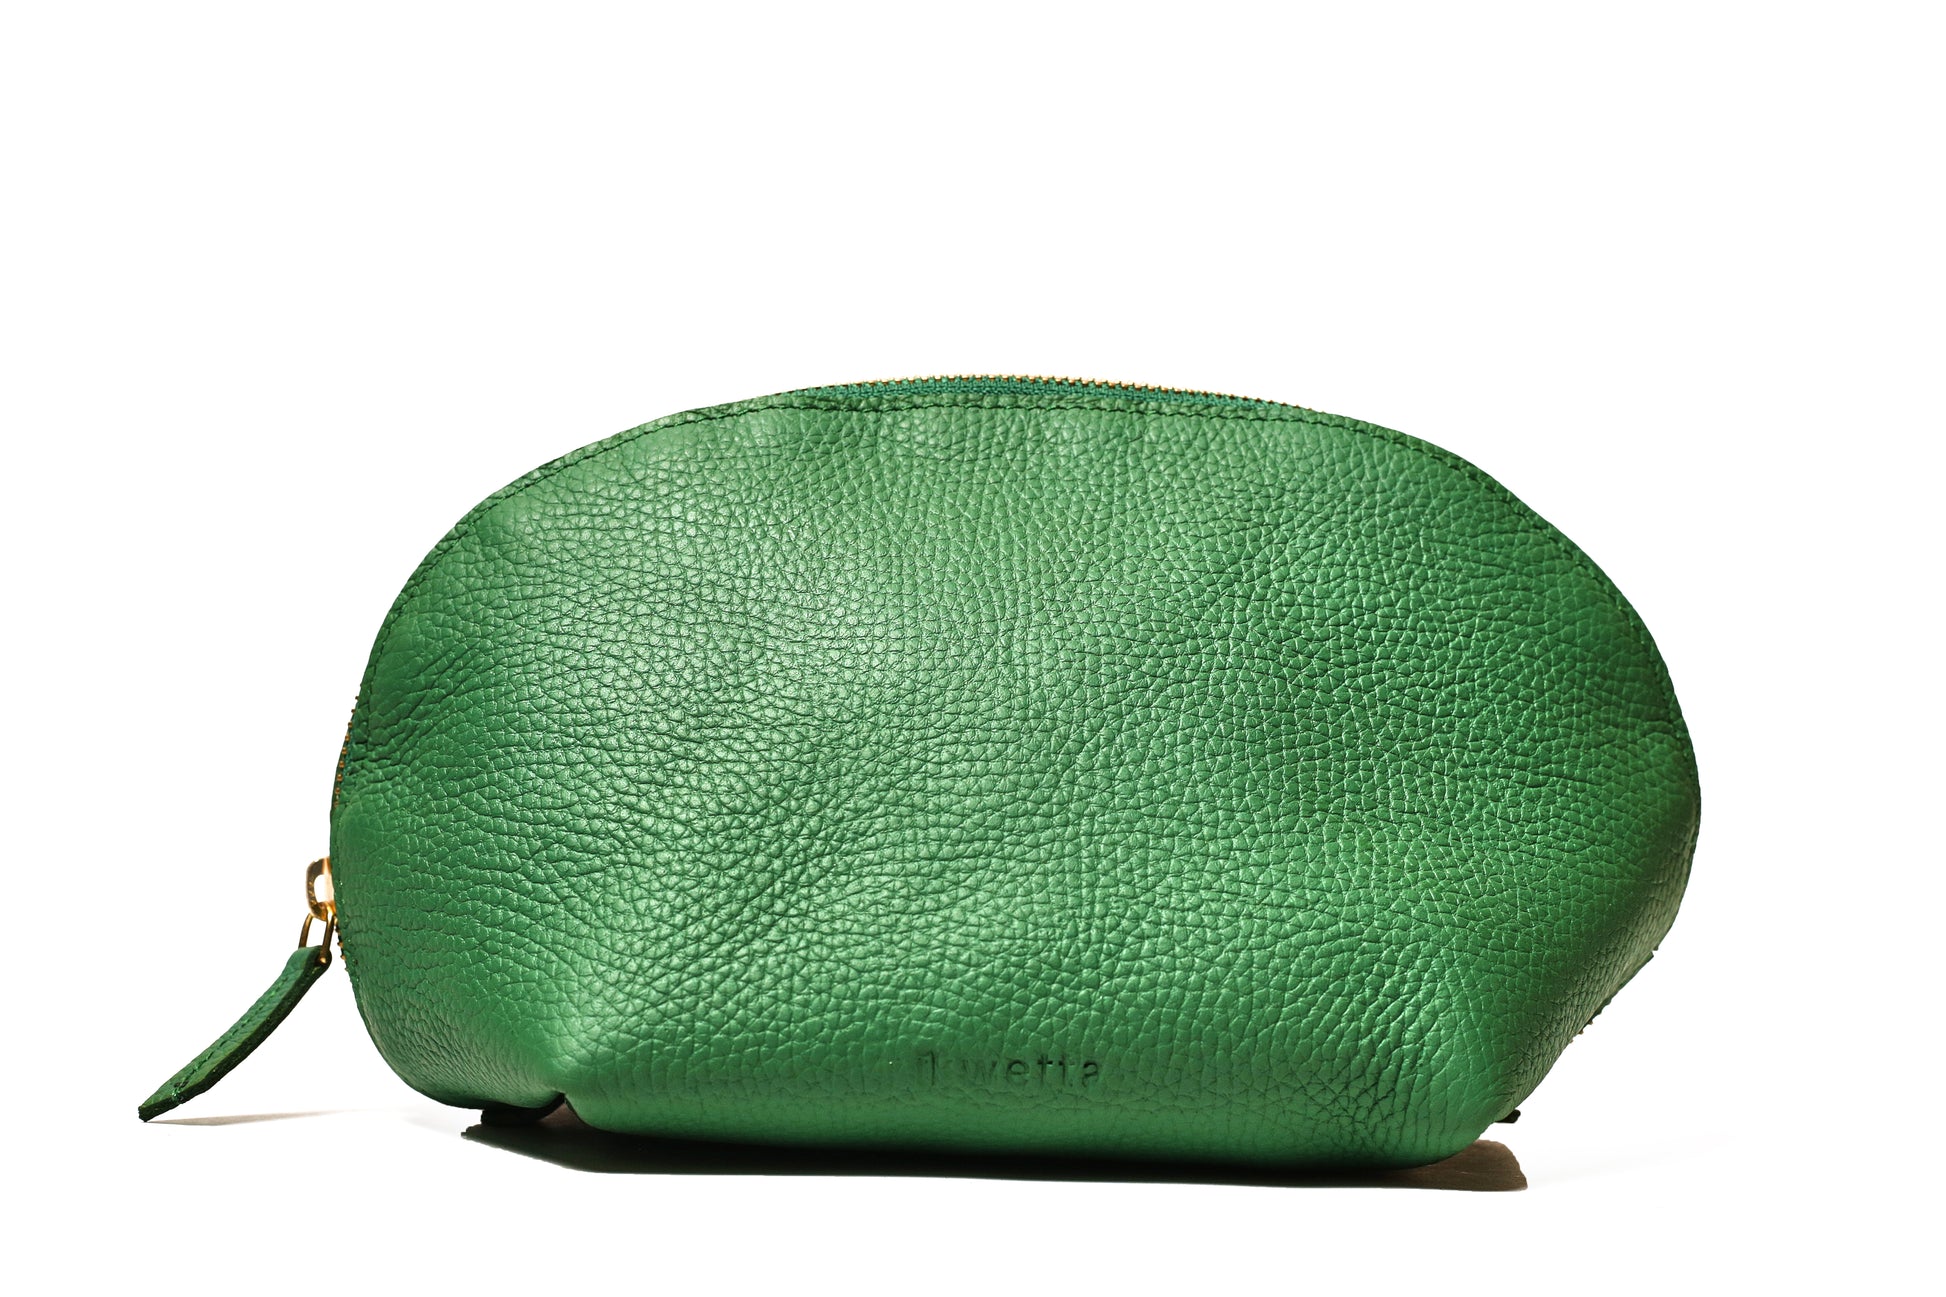 Viringo travel case in ultramarine green natural dyed milled leather